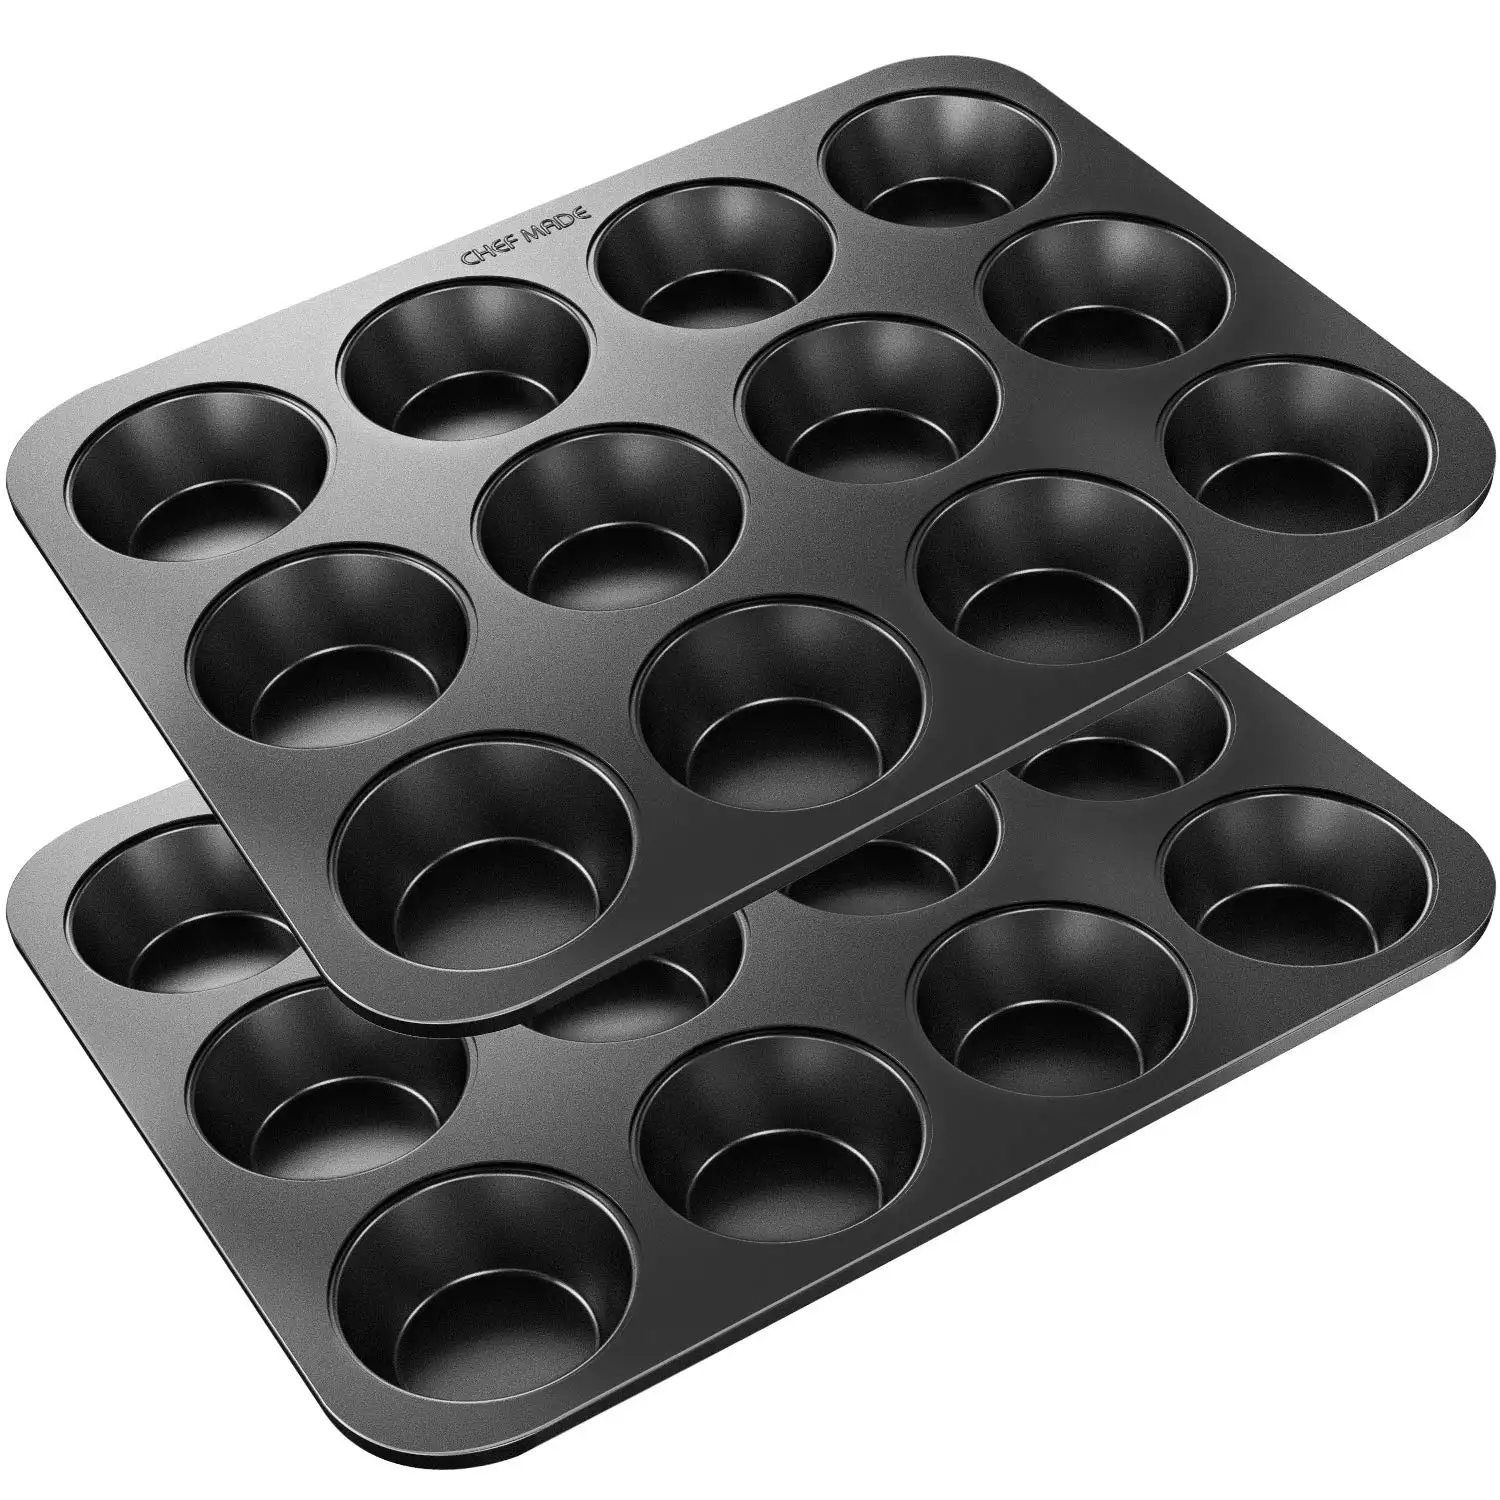 Chefmade Carbon Staal Oven Bakvormen Non Stick 12 Cup Ronde Cakevorm Cupcake Tin Muffin Mold Lade Bakken Pan